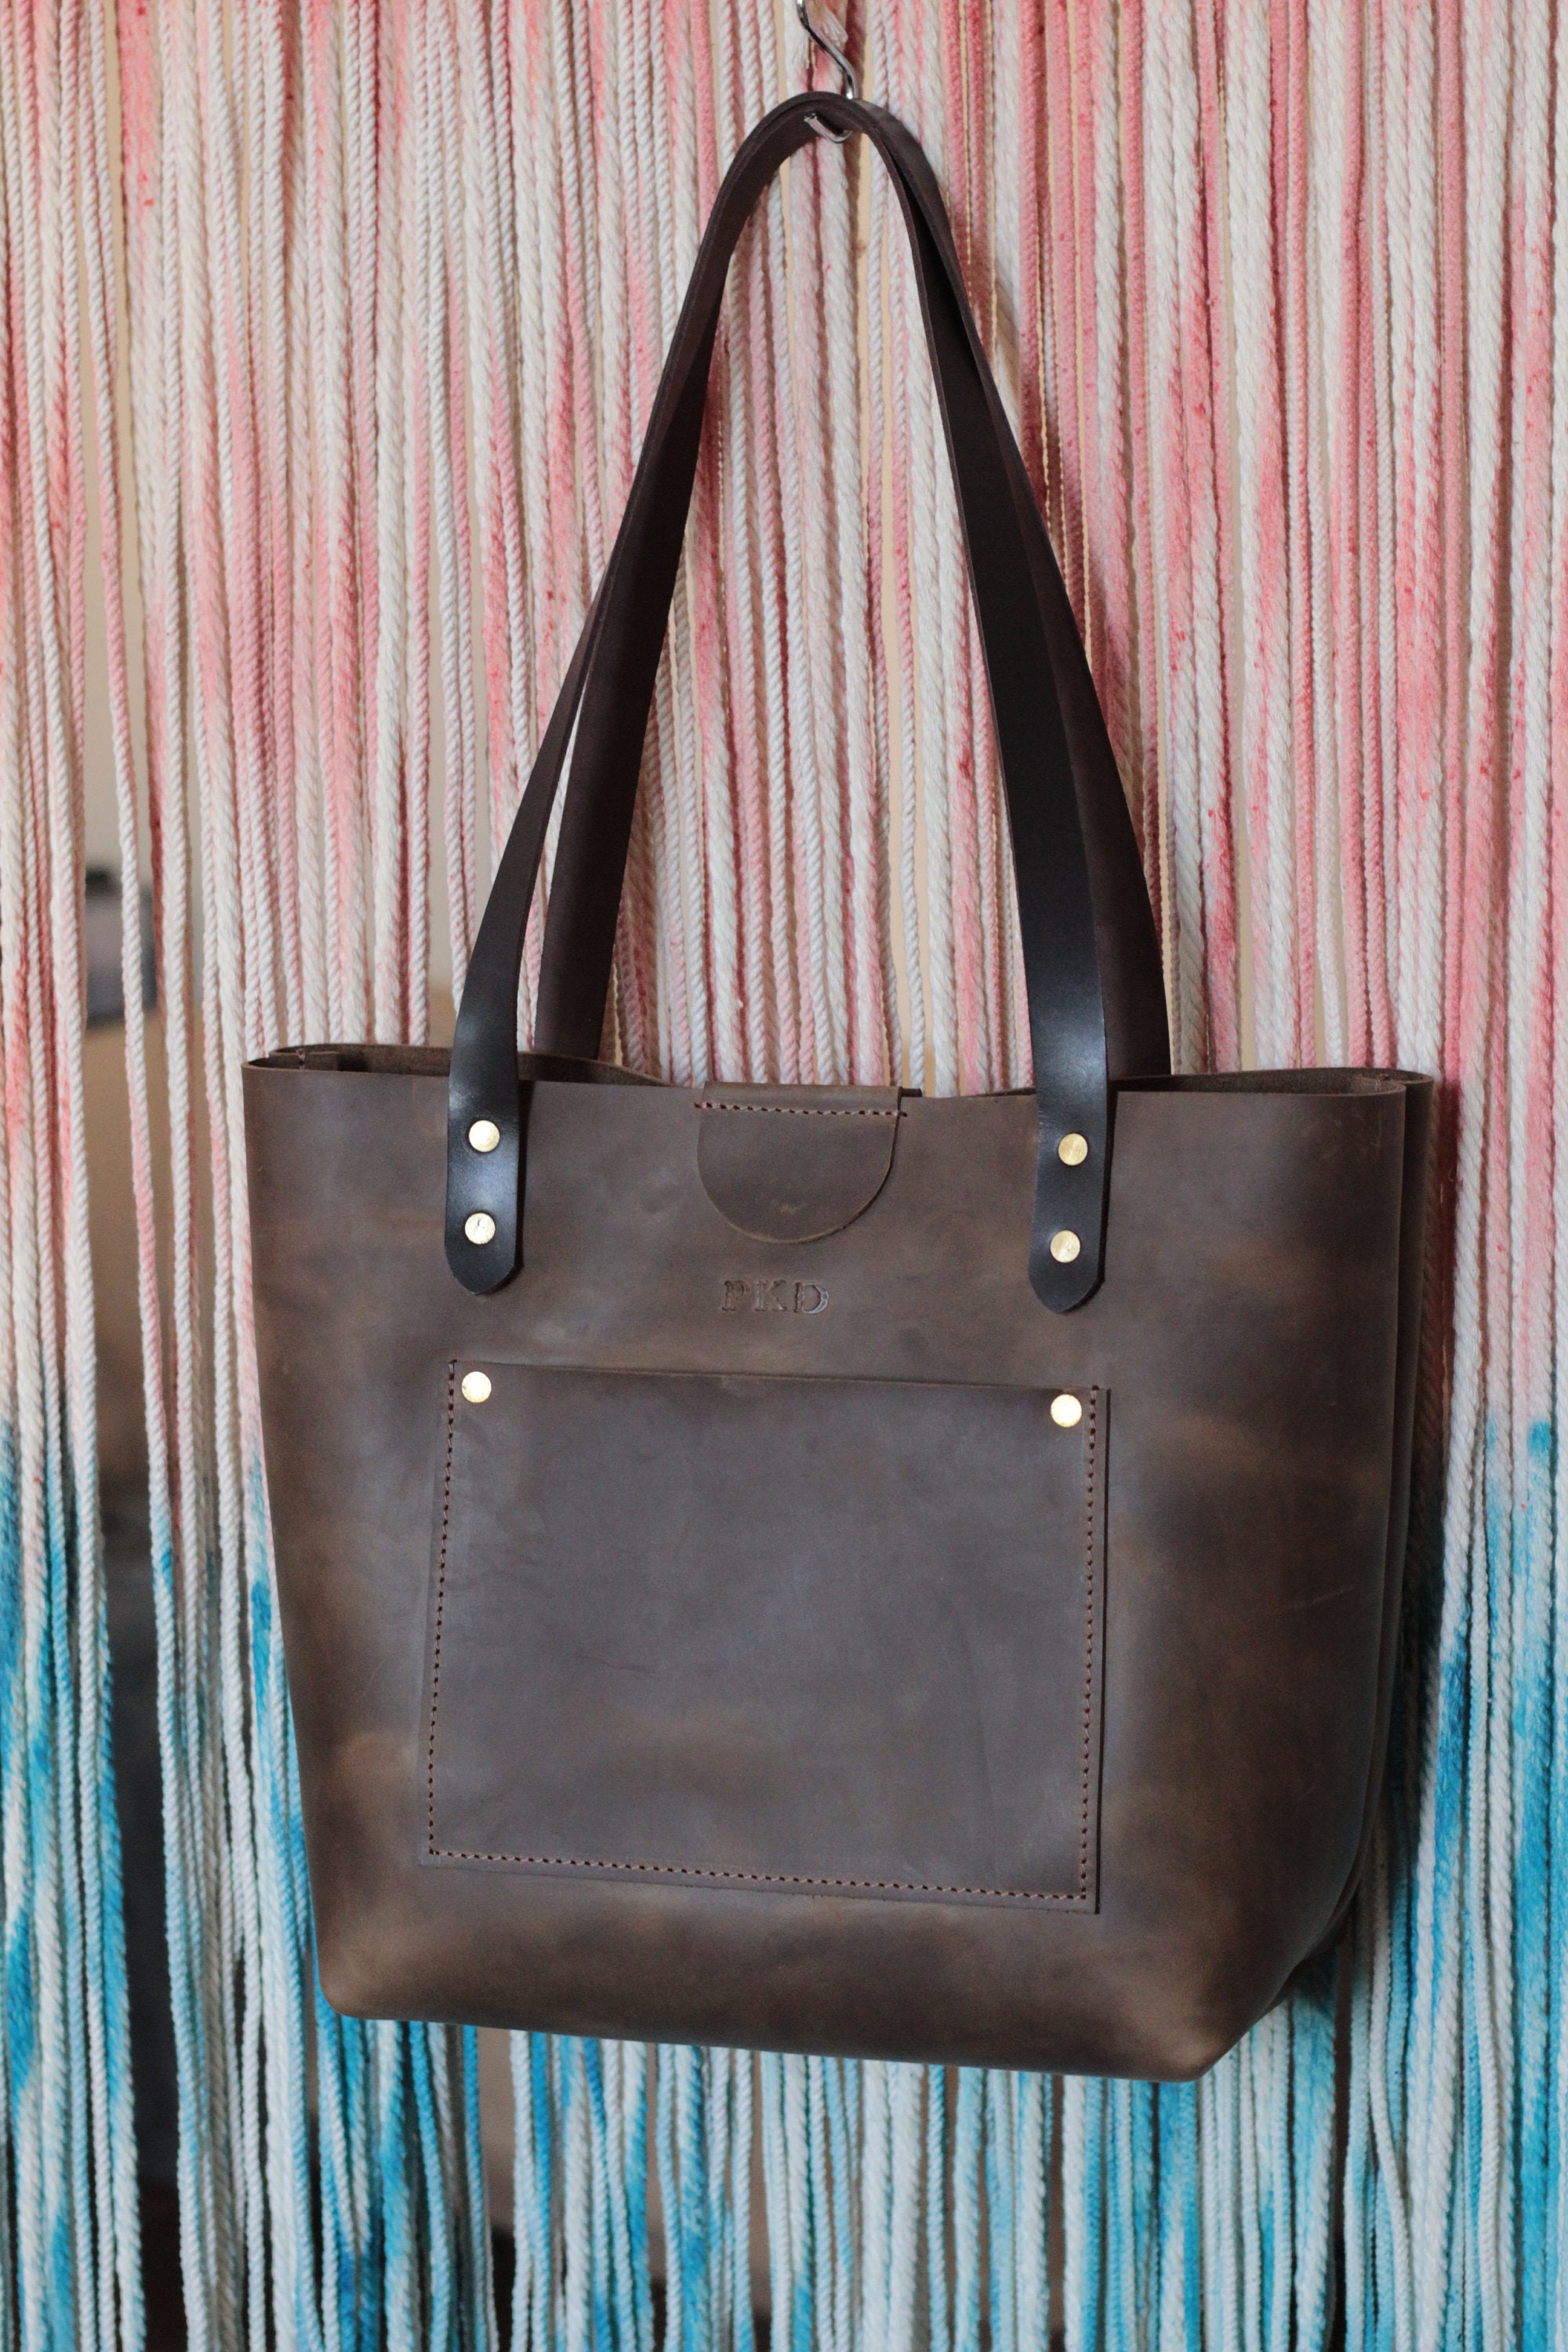 TOTE bag Leather tote bag Shoulder tote bag Handmade bag Tote | Etsy